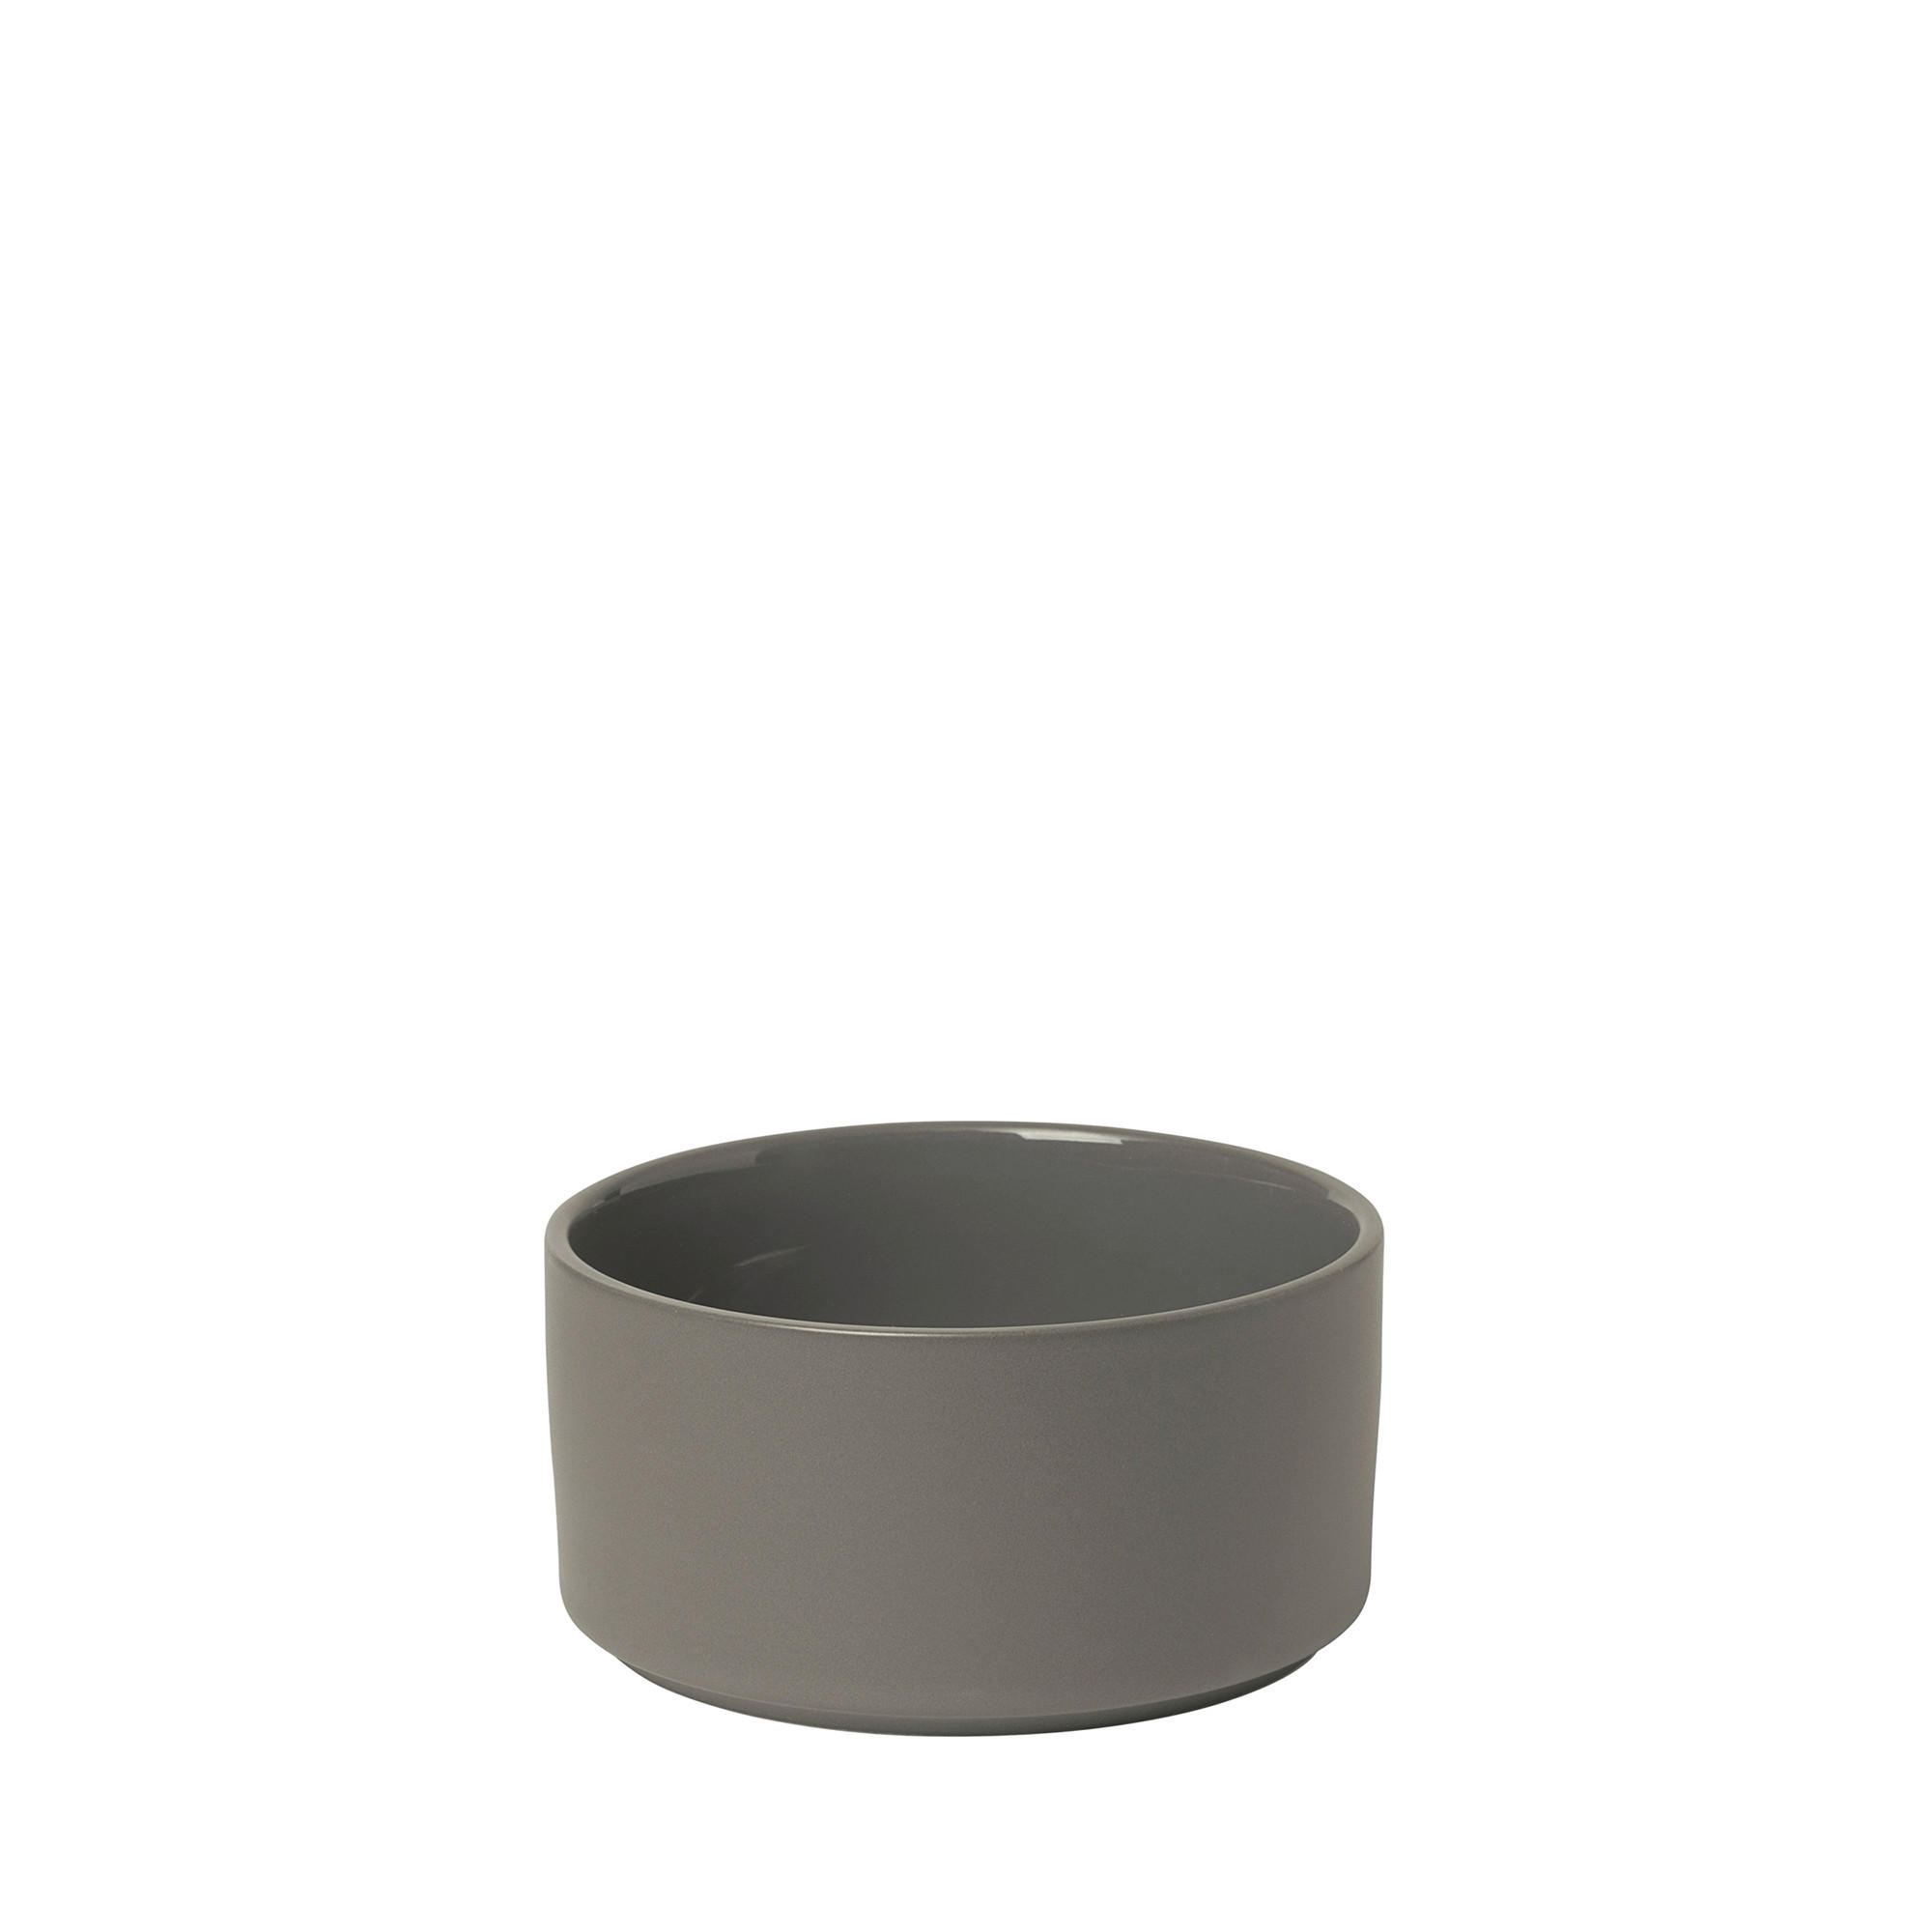 SCHALE Keramik  - Dunkelgrau, Design, Keramik (14/7cm) - Blomus